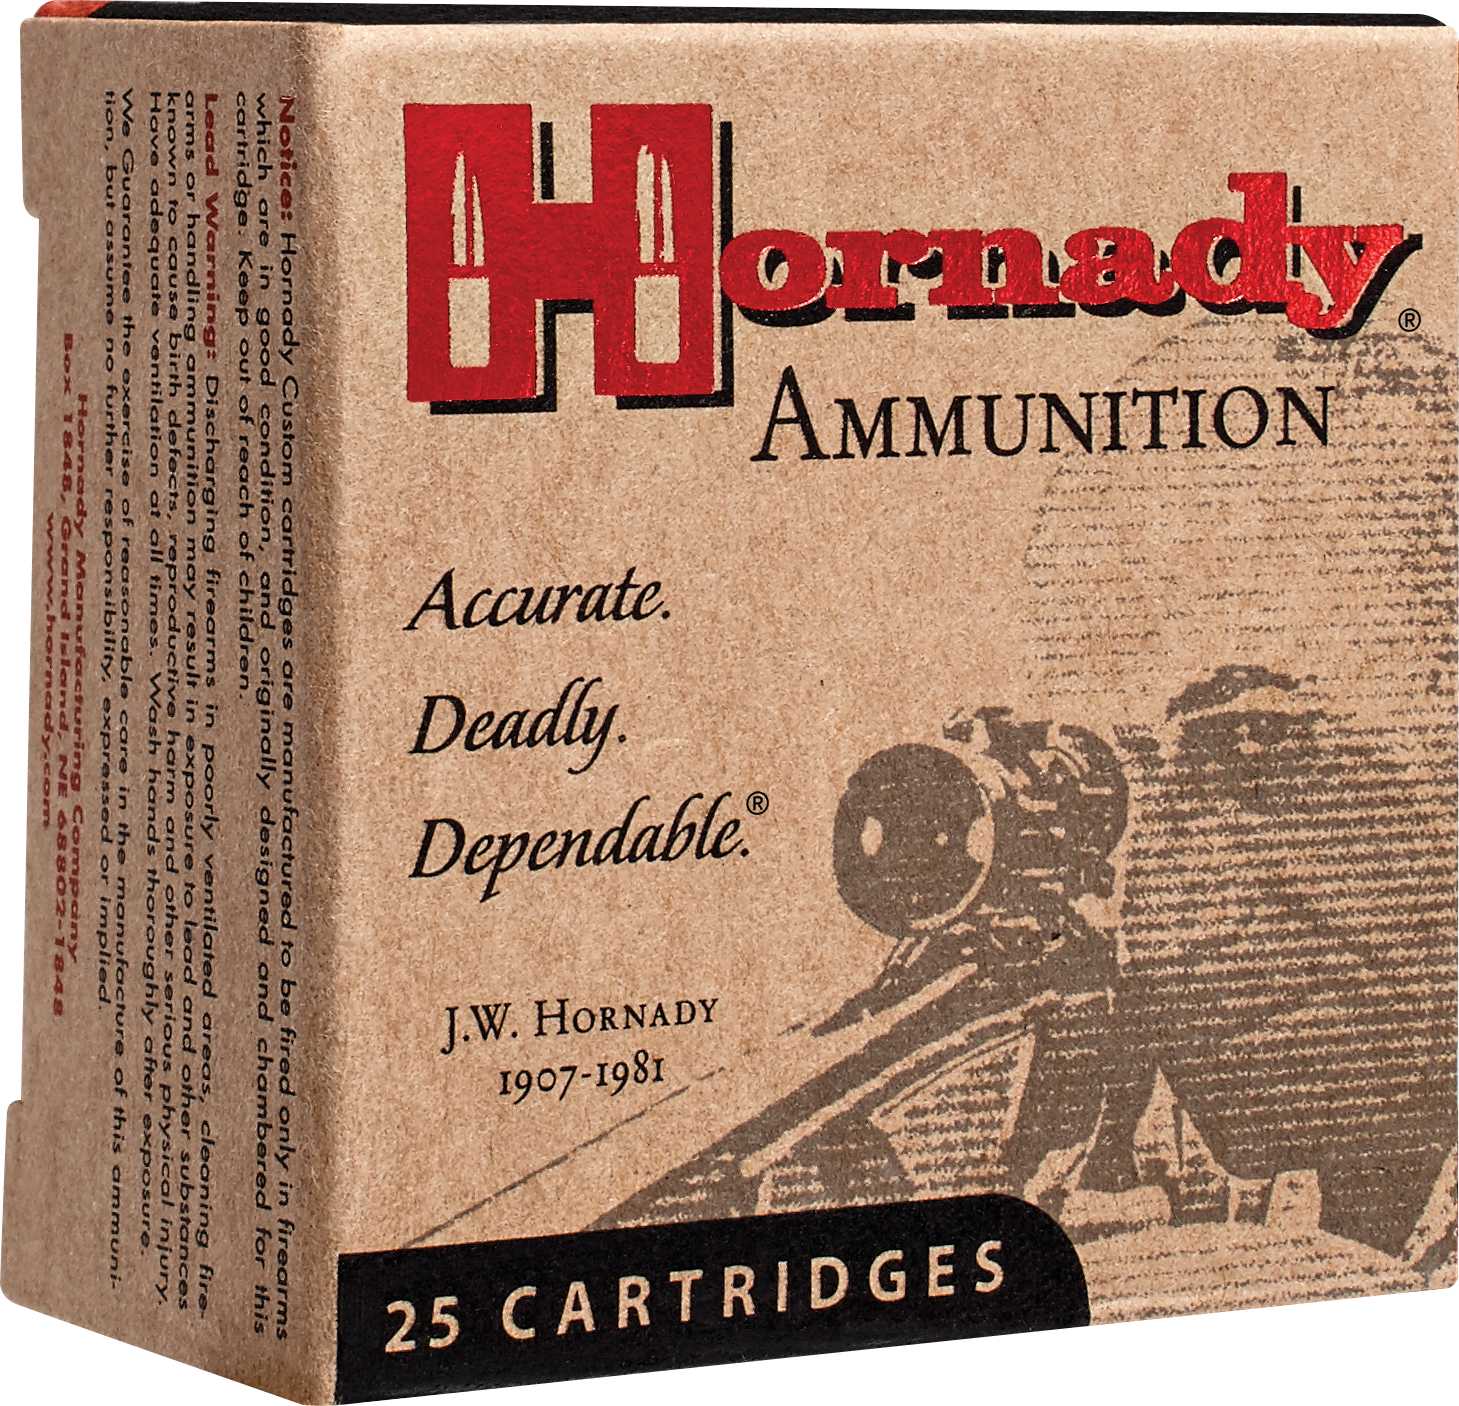 45 ACP 20 Rounds Ammunition Hornady 230 Grain Hollow Point